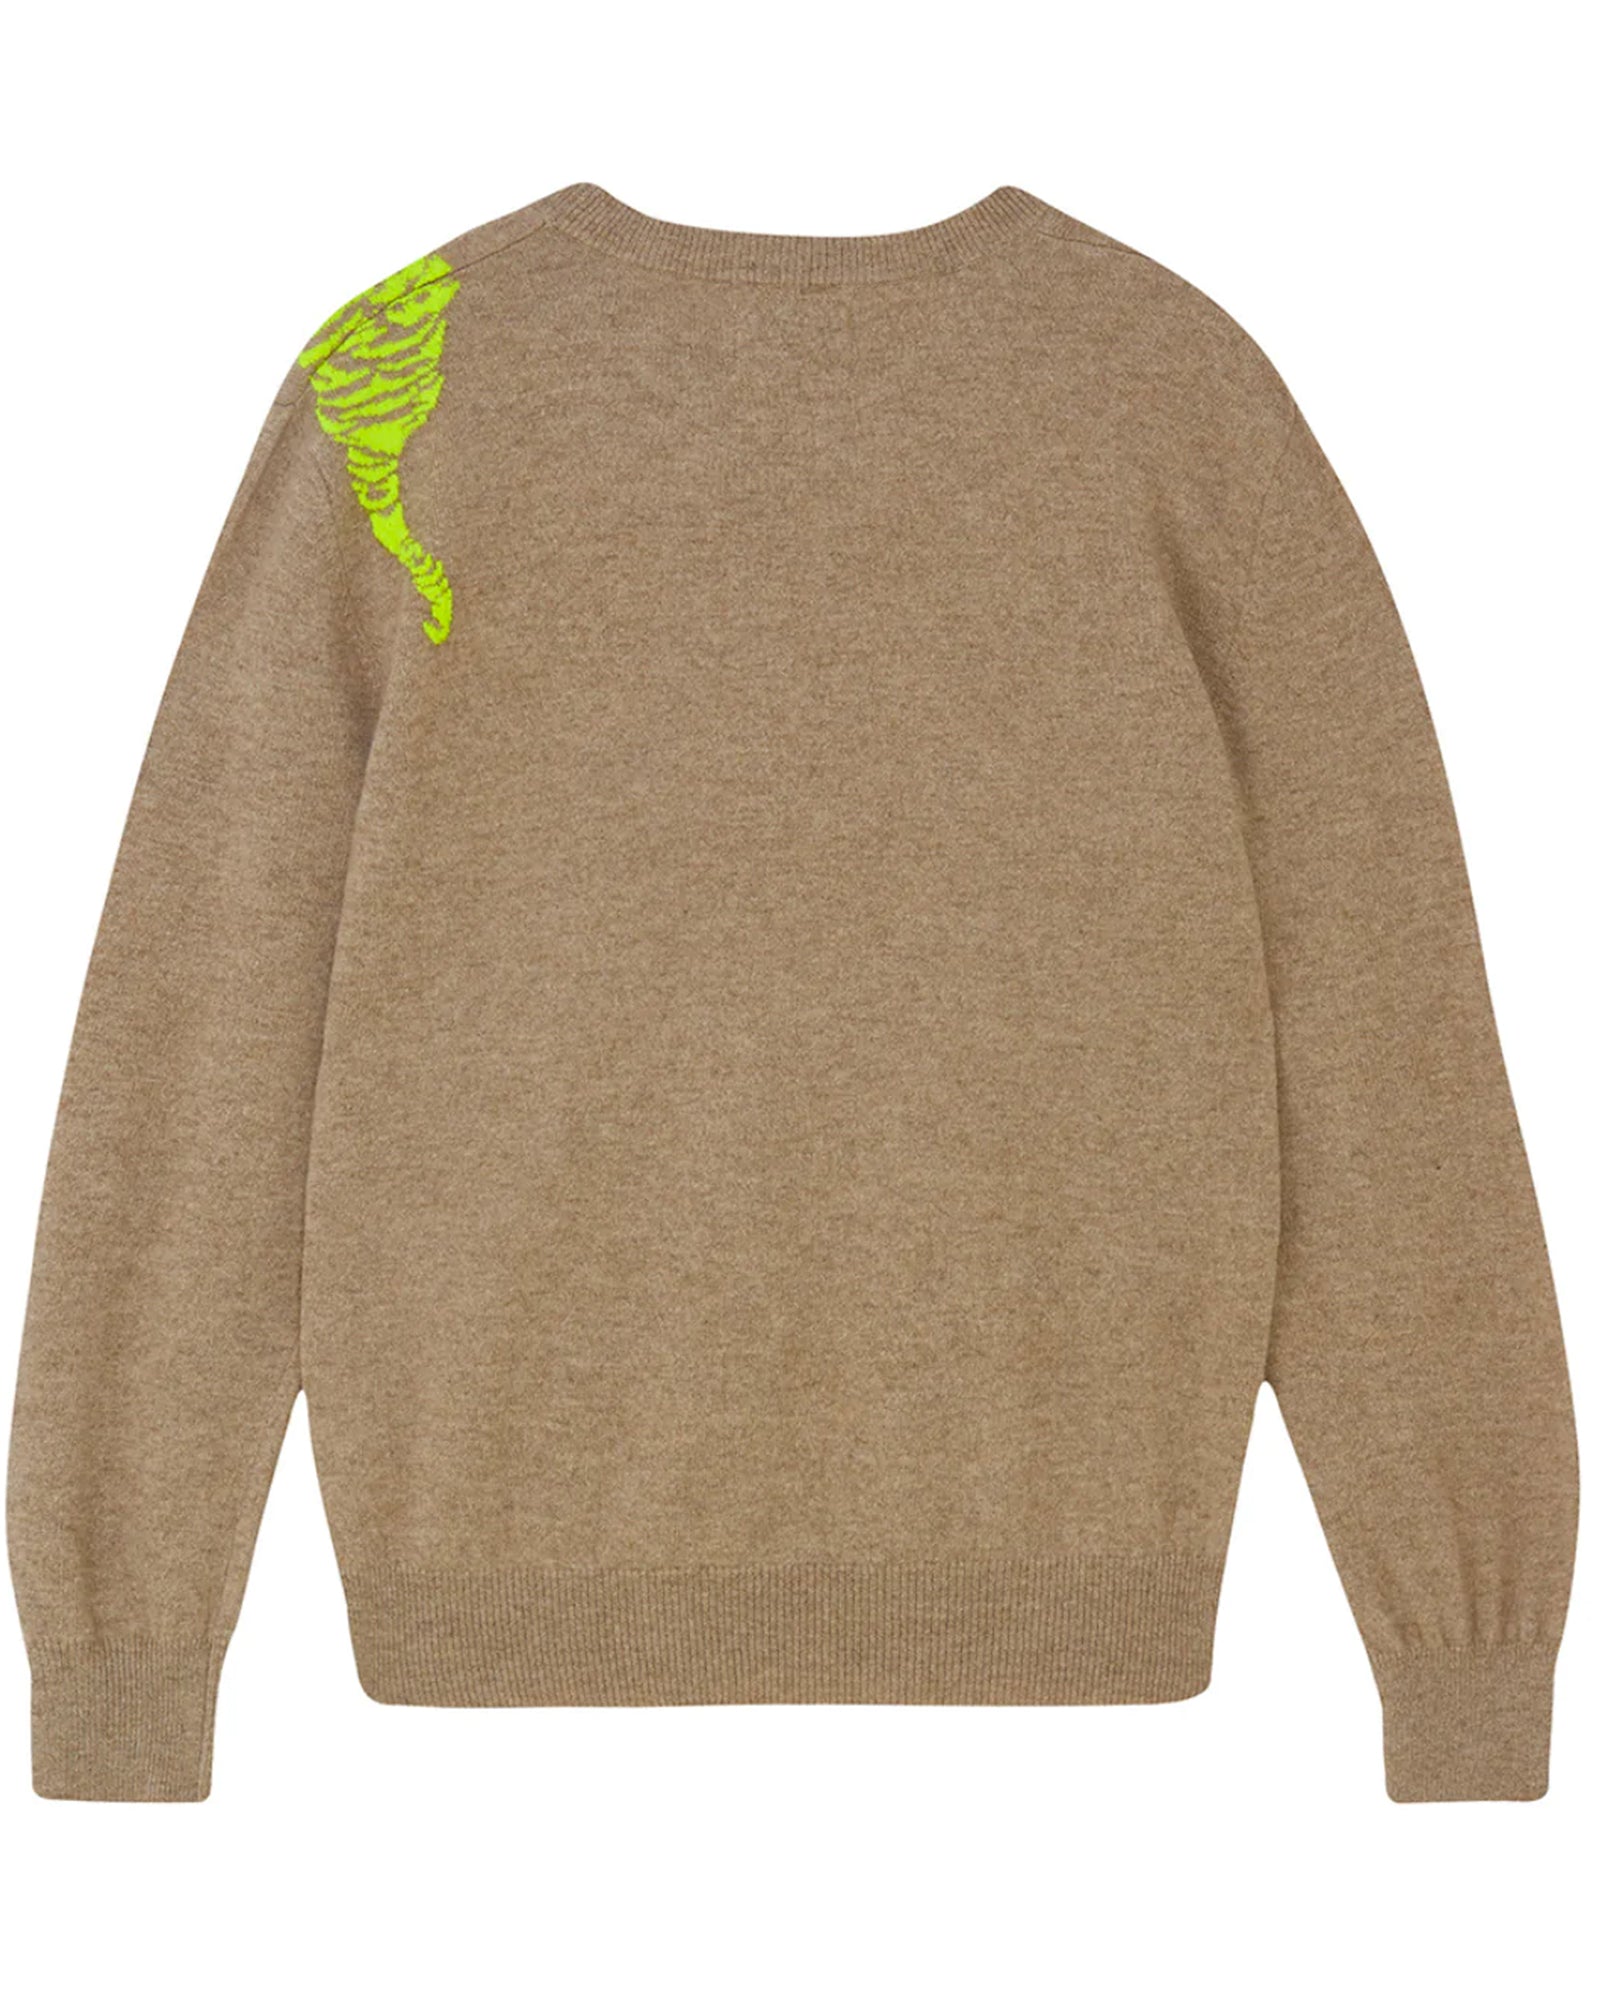 Creeping Tiger Cashmere Sweater-Sweaters-Jumper 1234-Black/Cream • Jumper 1234-1-Mercantile Portland